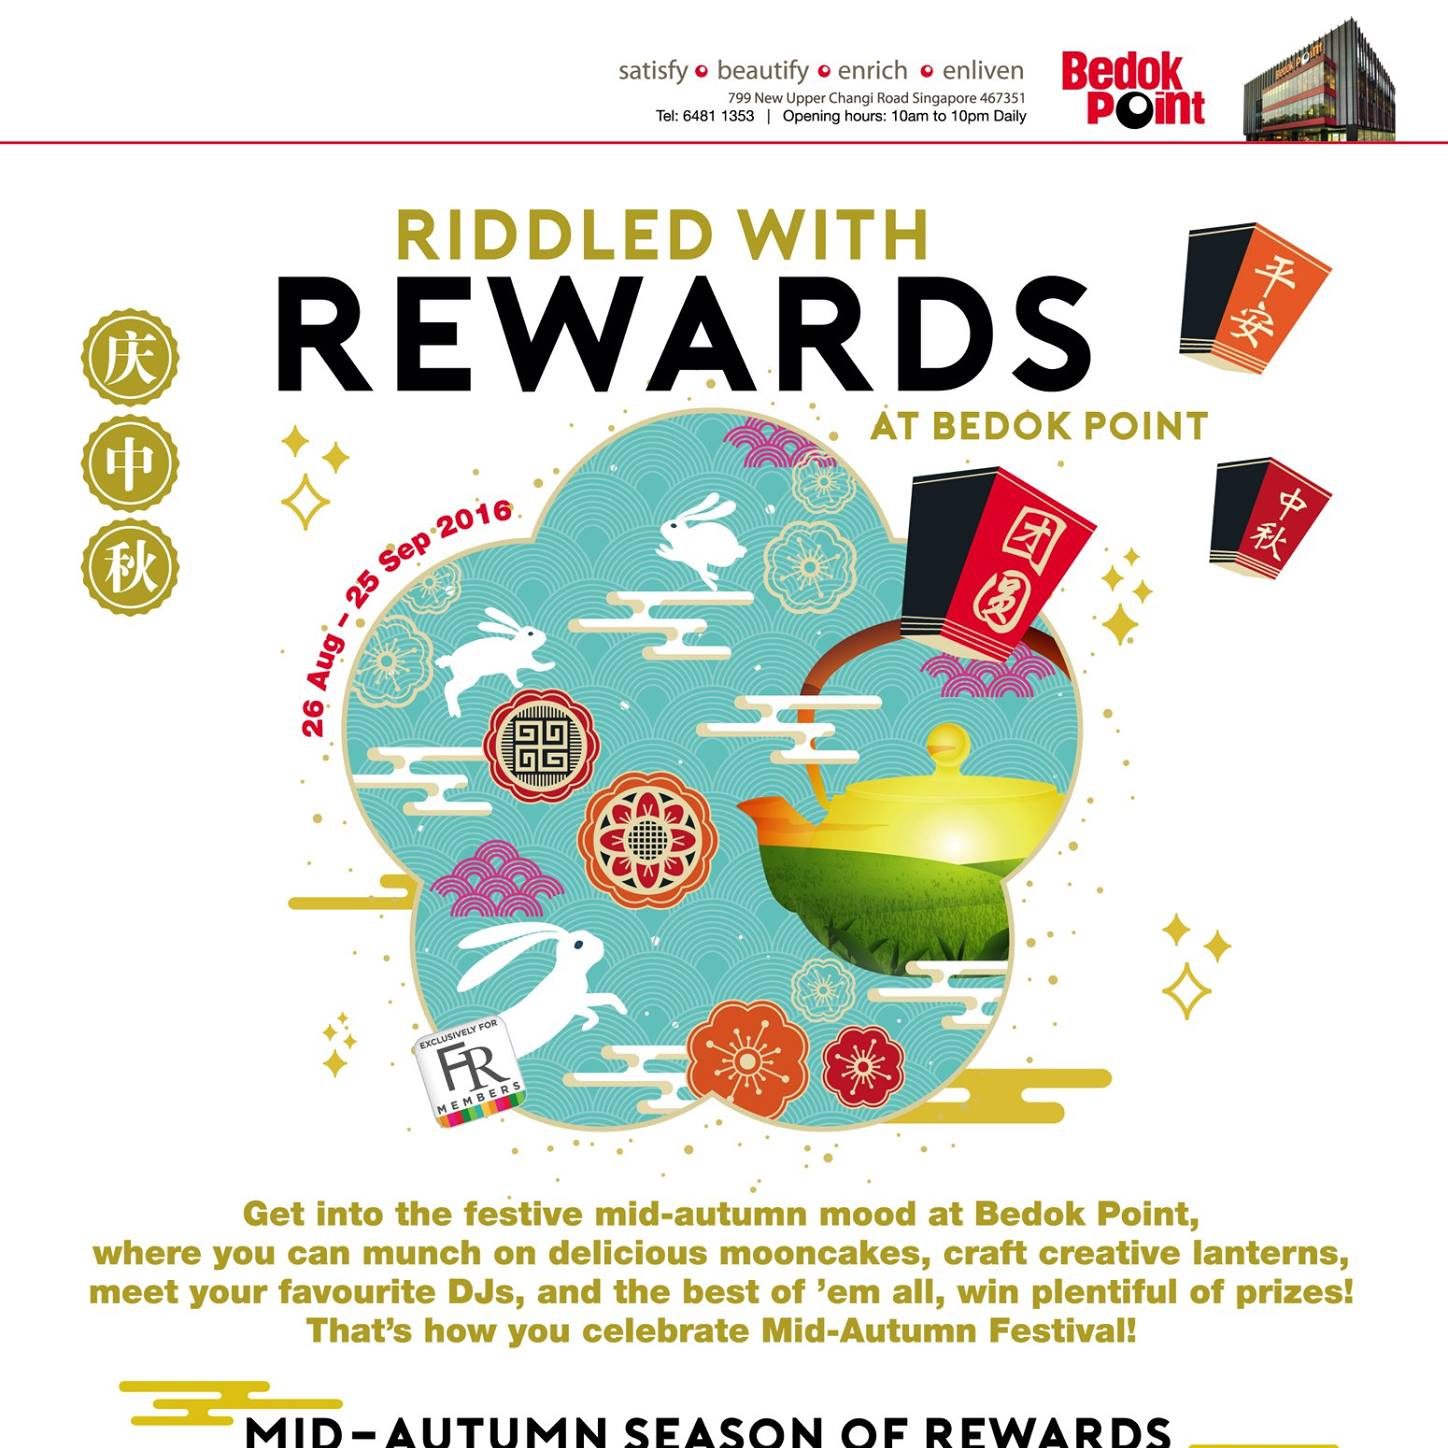 Bedok Point Singapore Riddled with Rewards Mid-Autumn Season Promotion 26 Aug to 25 Sep 2016